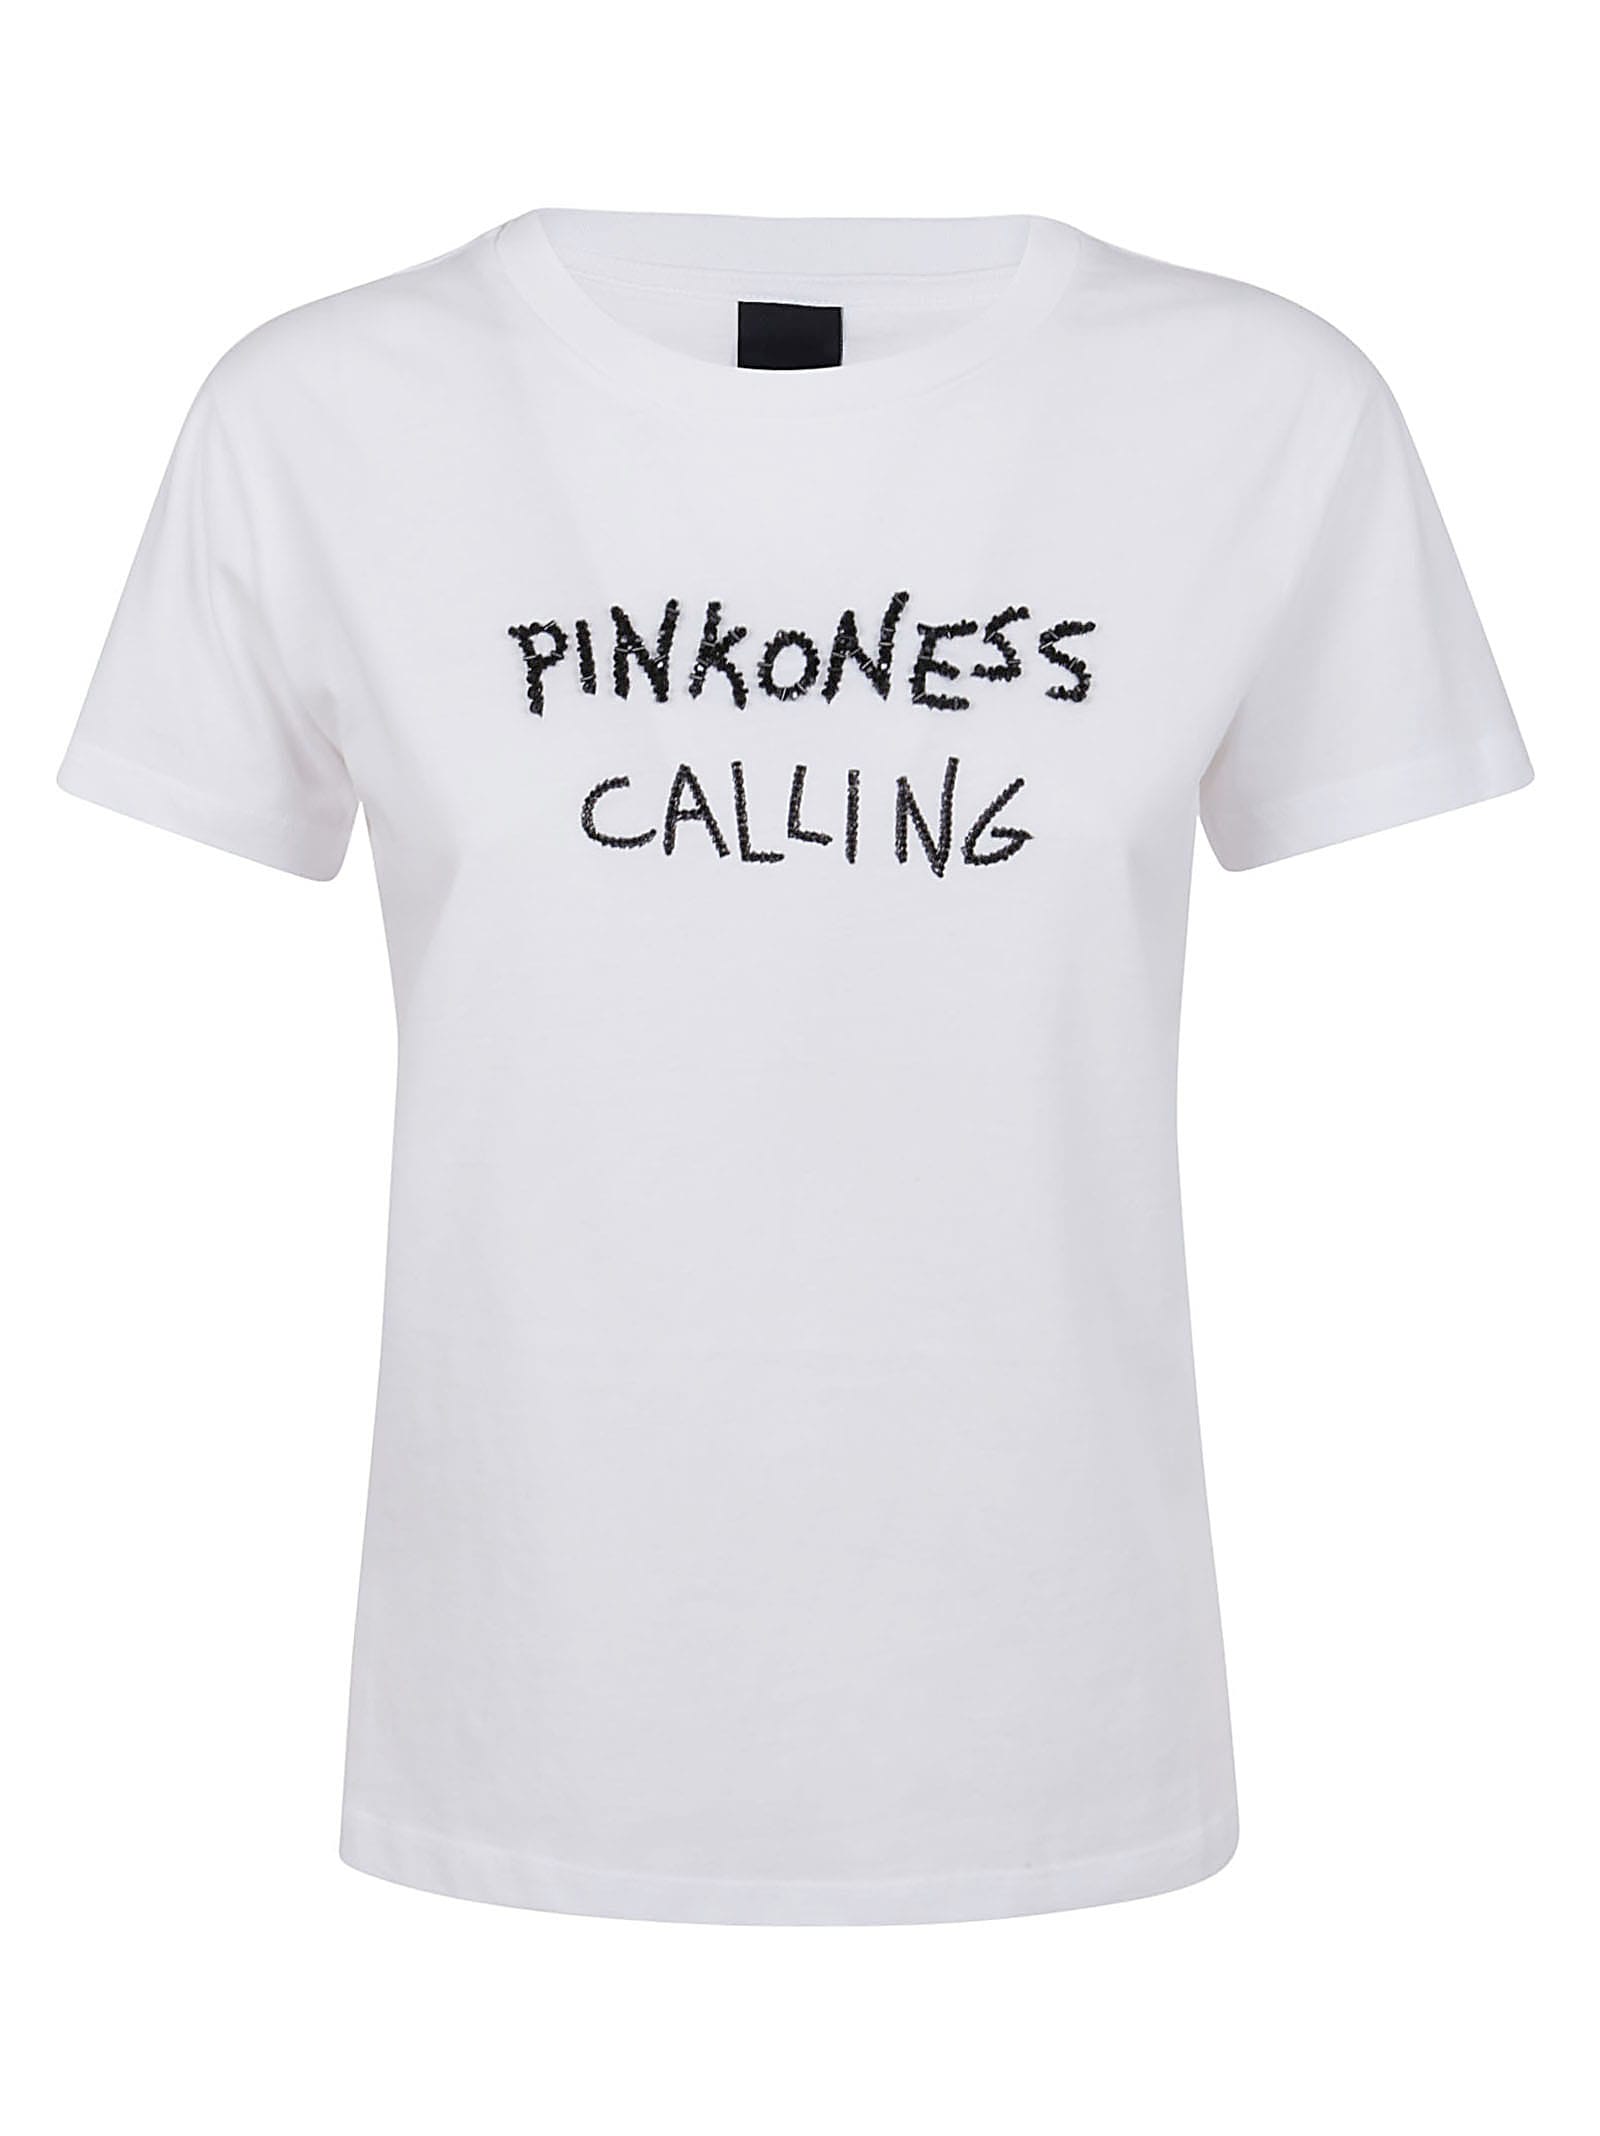 Pinko White Cotton T-shirt